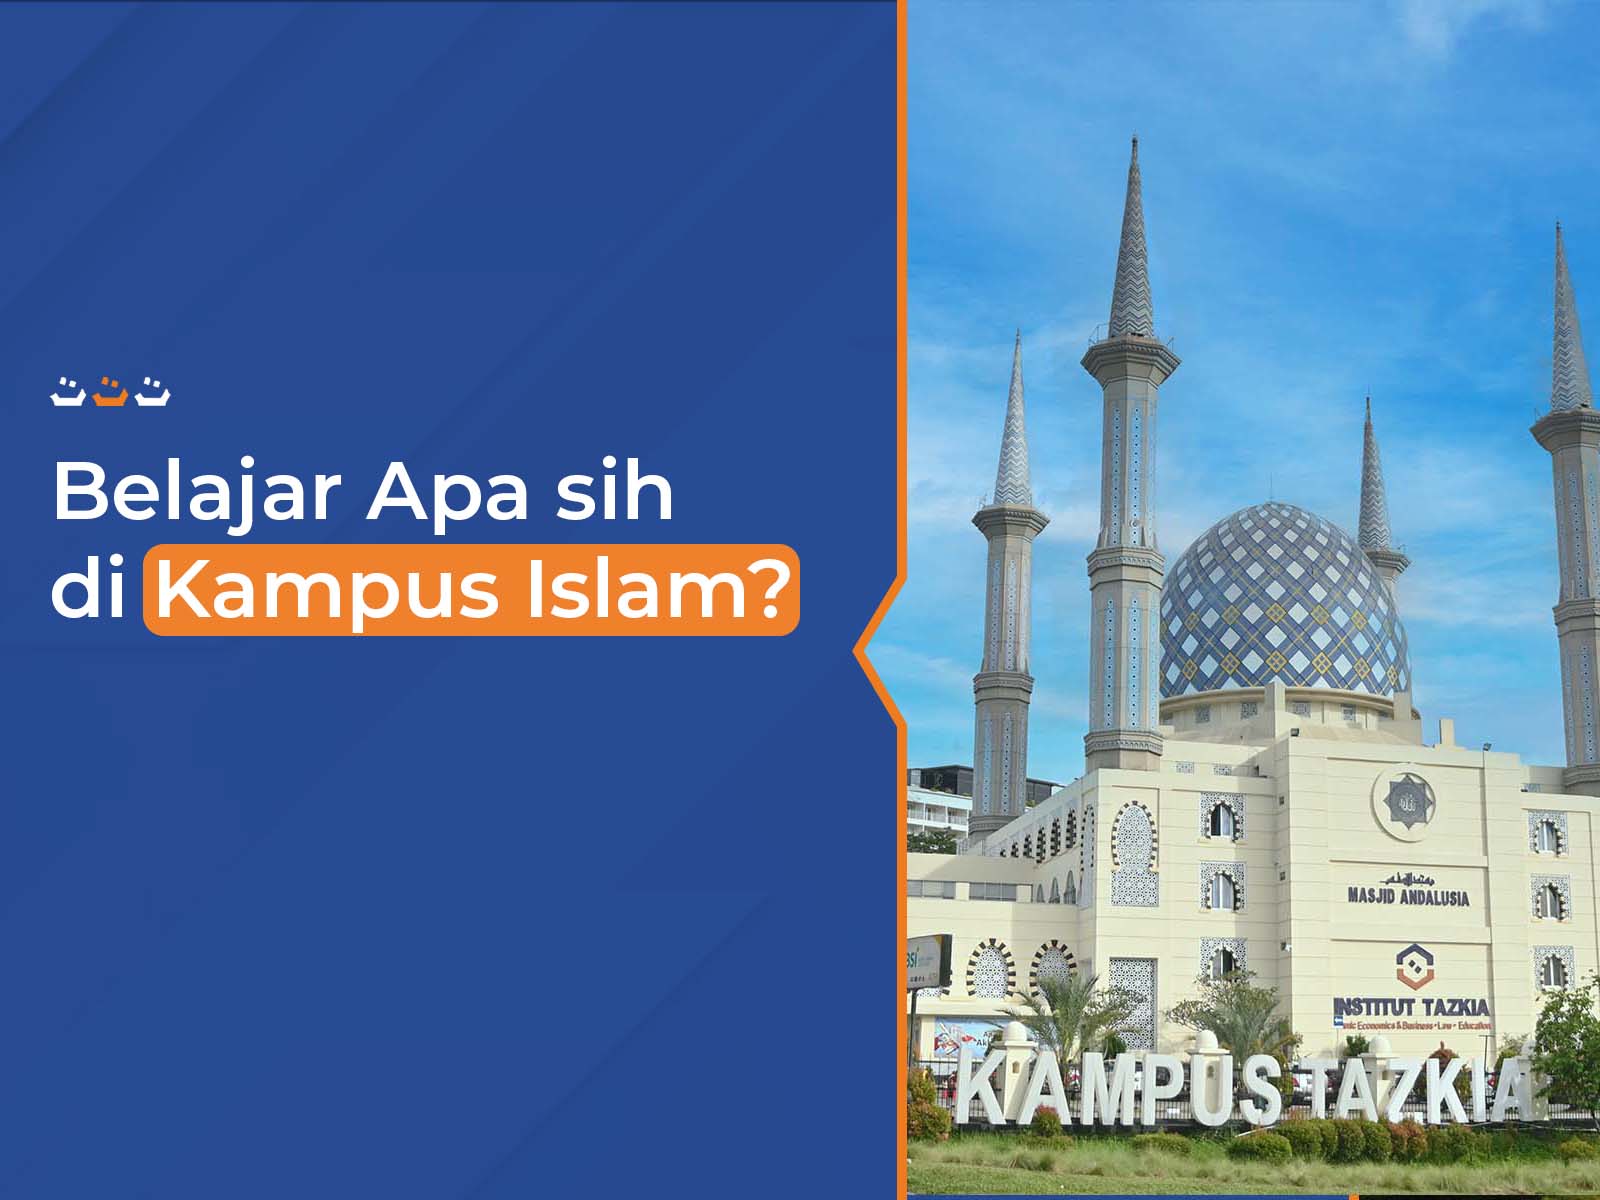 Belajar Apa sih di Kampus Islam?